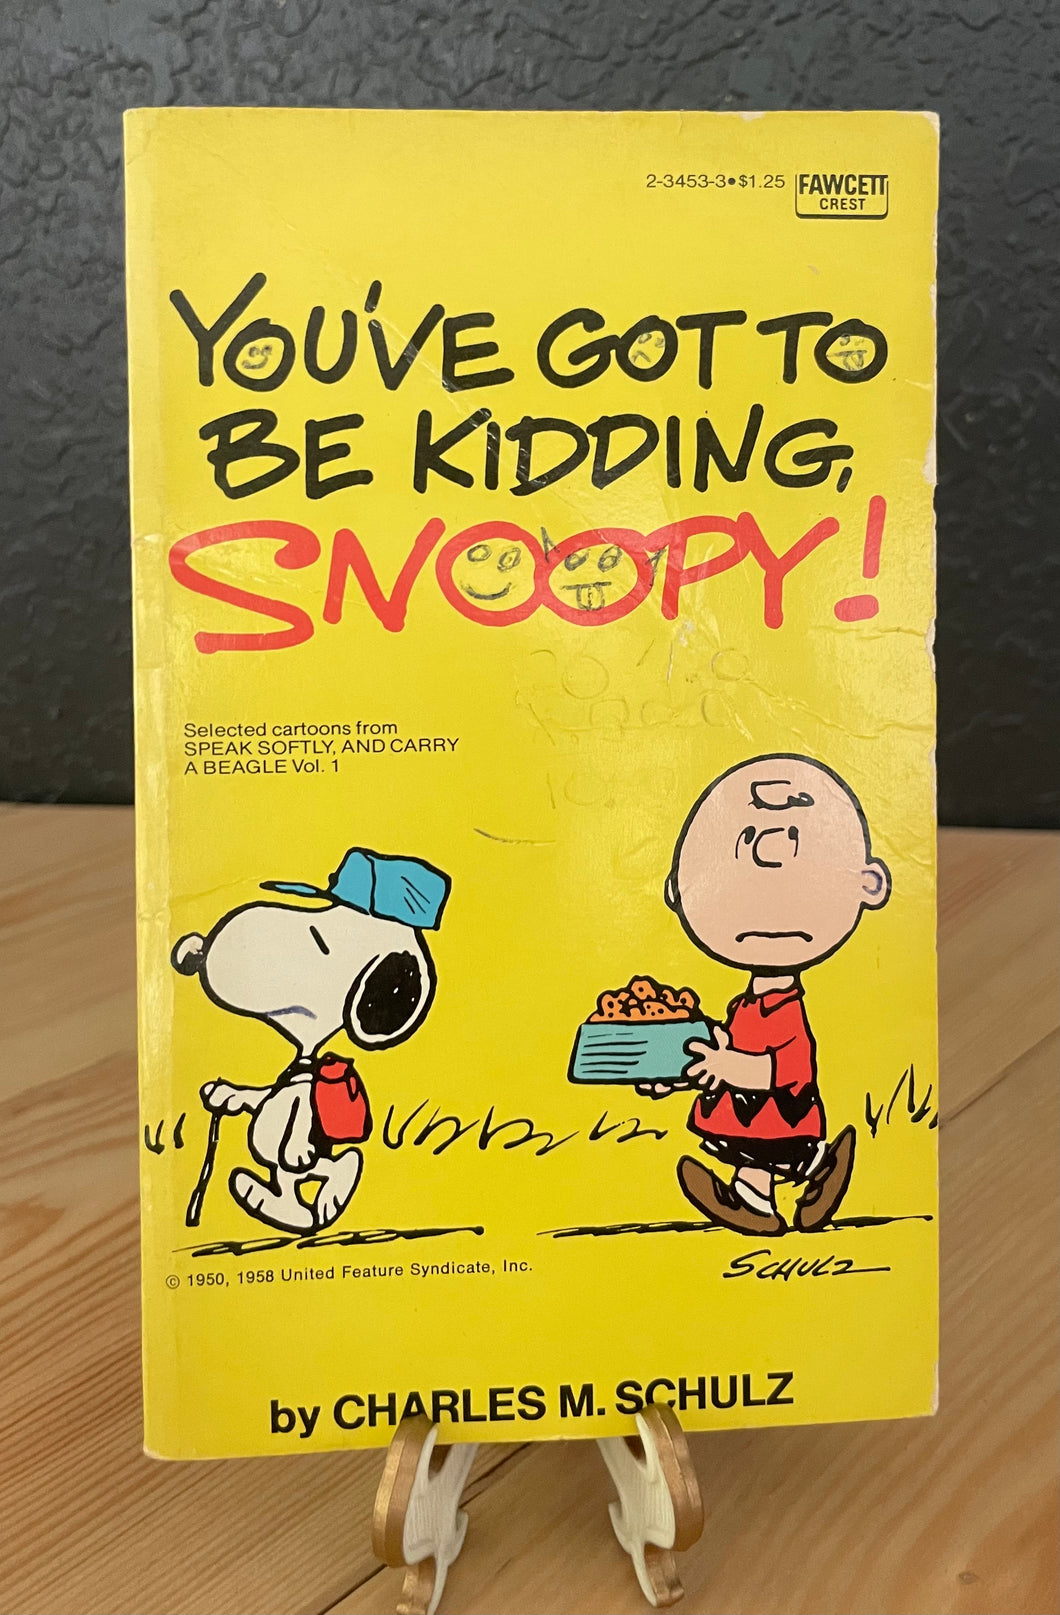 1974 “You’ve Got To Be Kidding, Snoopy” Vintage Paperback Book